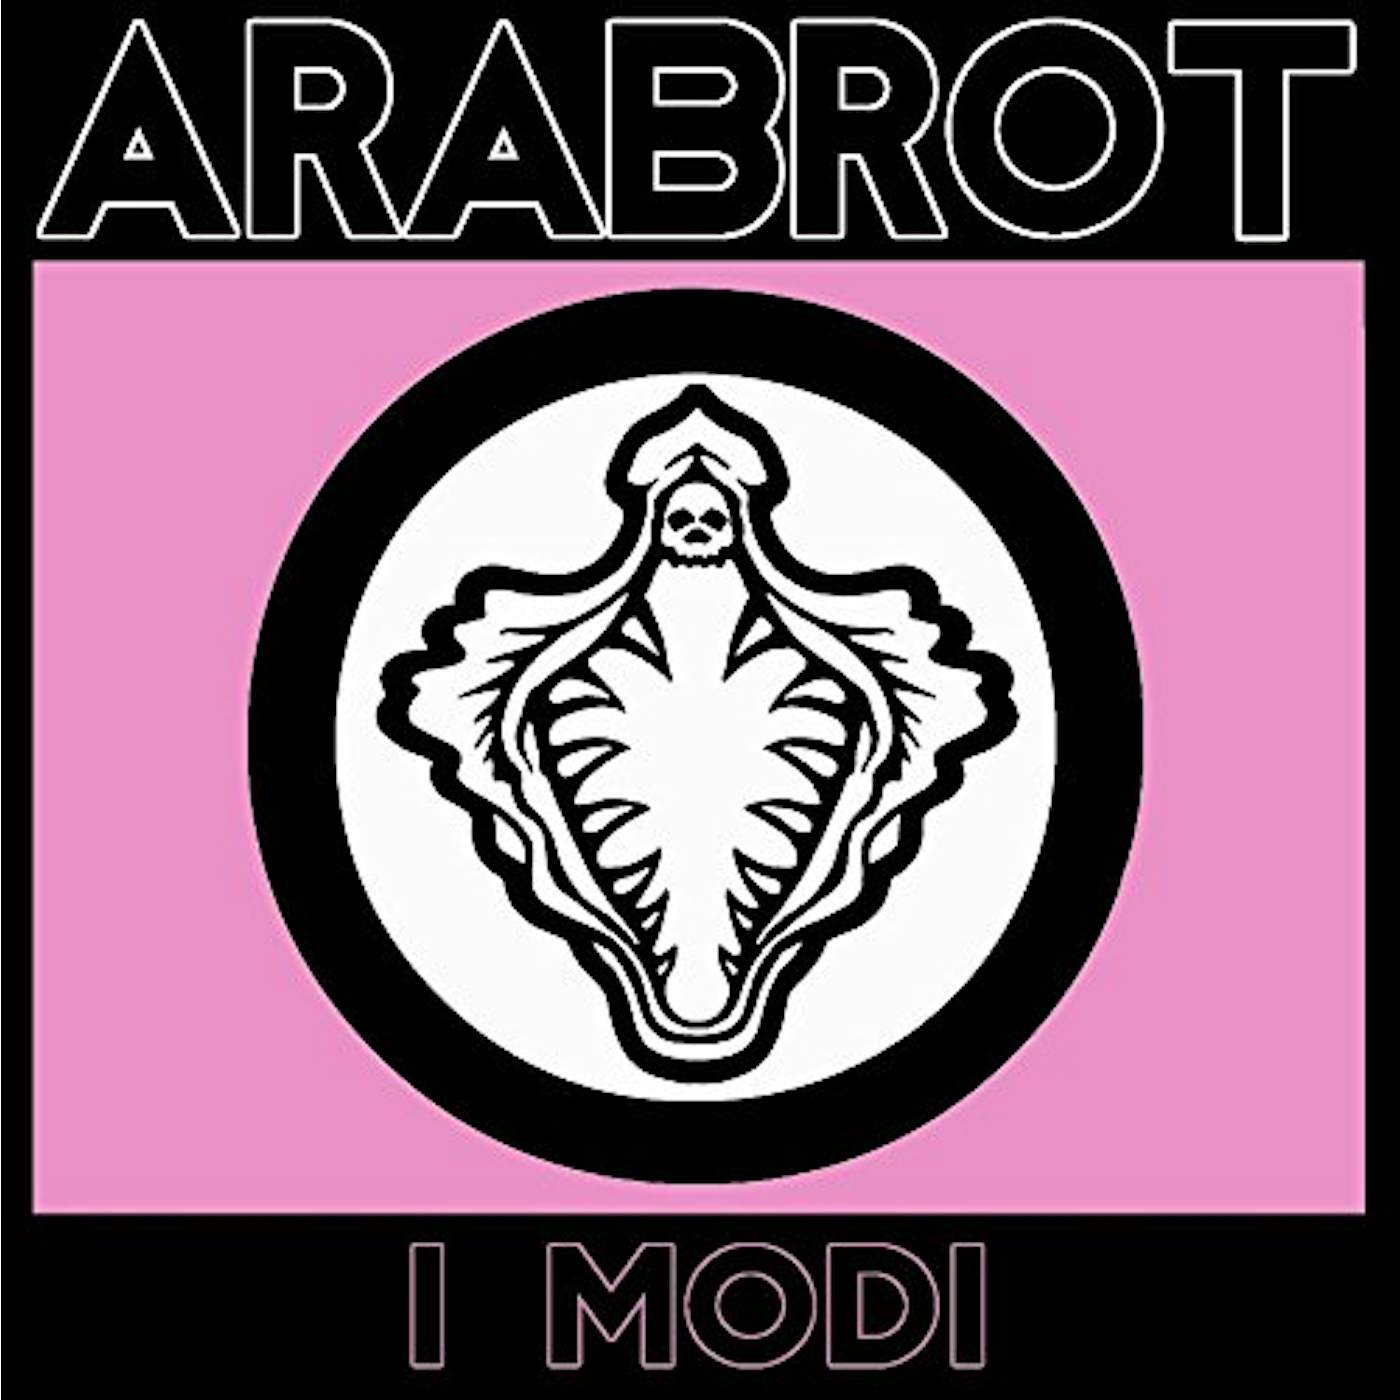 Årabrot I MODI (UK) (Vinyl)